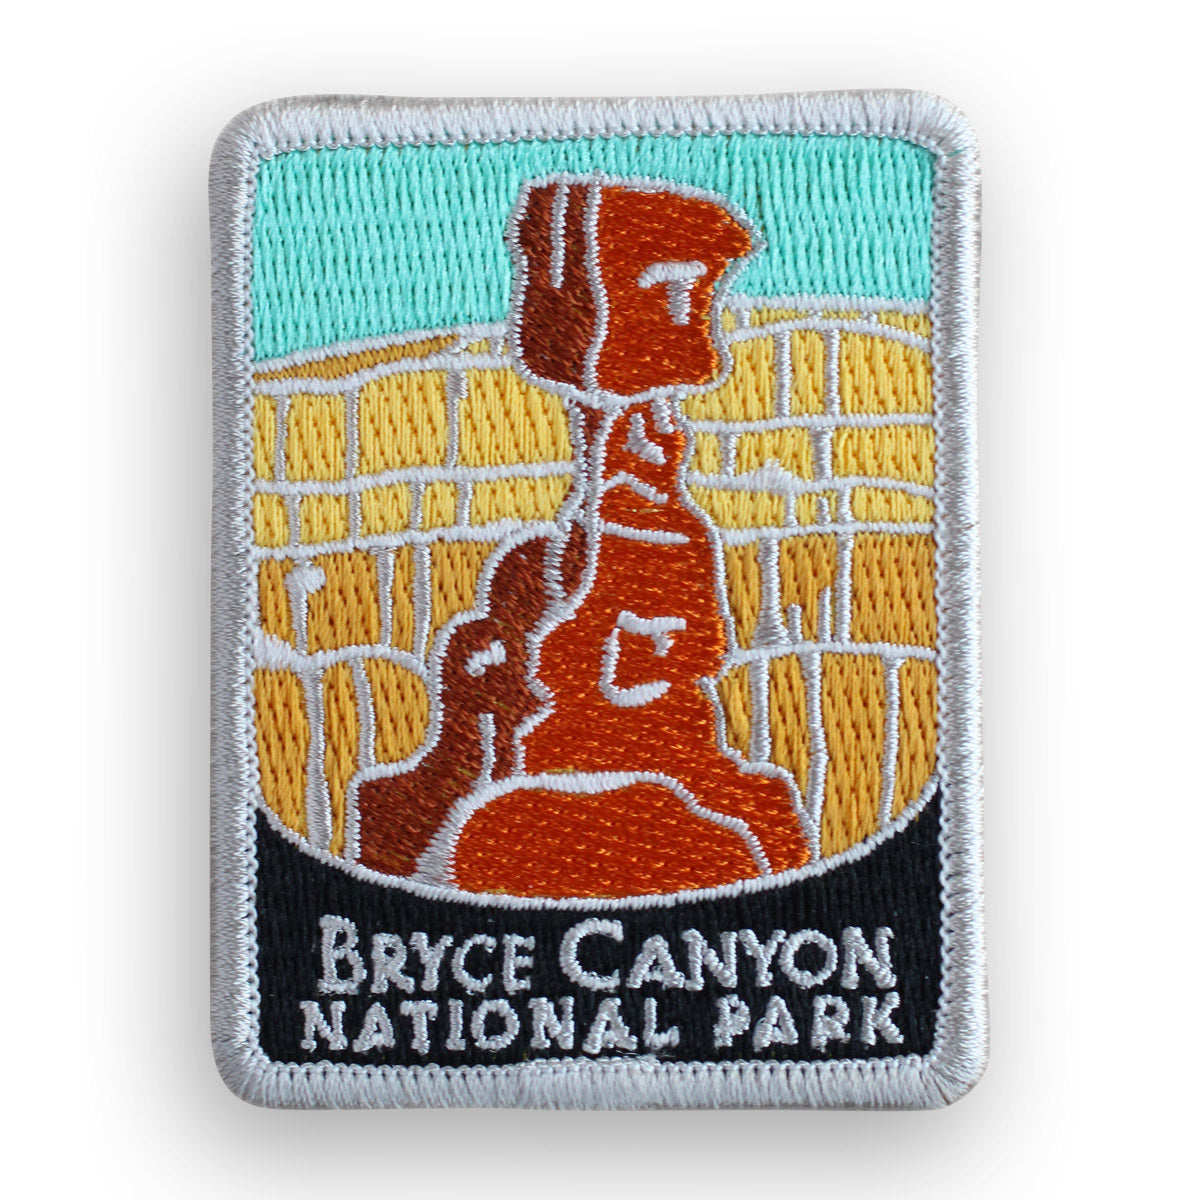 Bryce Canyon National Park Traveler Patch